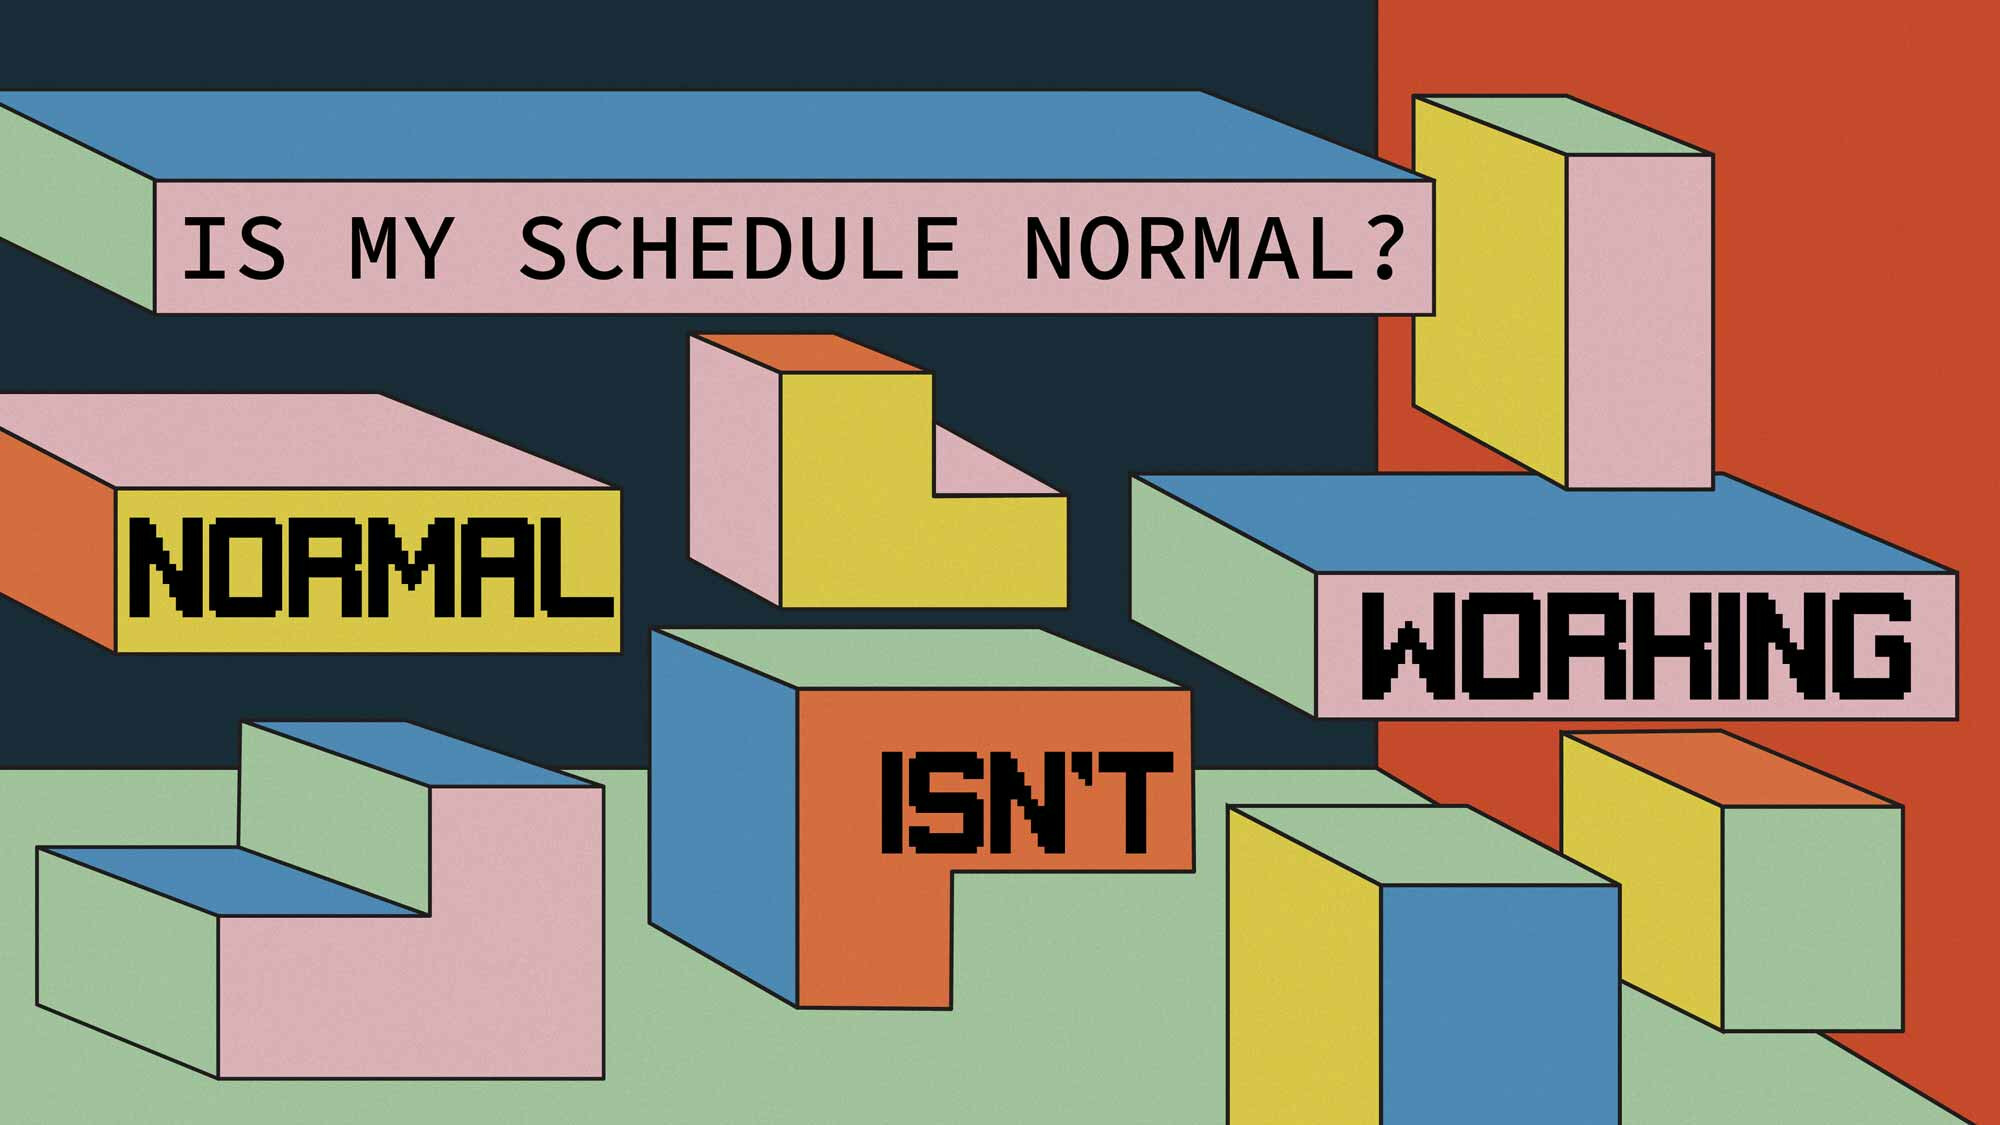 Is my schedule normal?